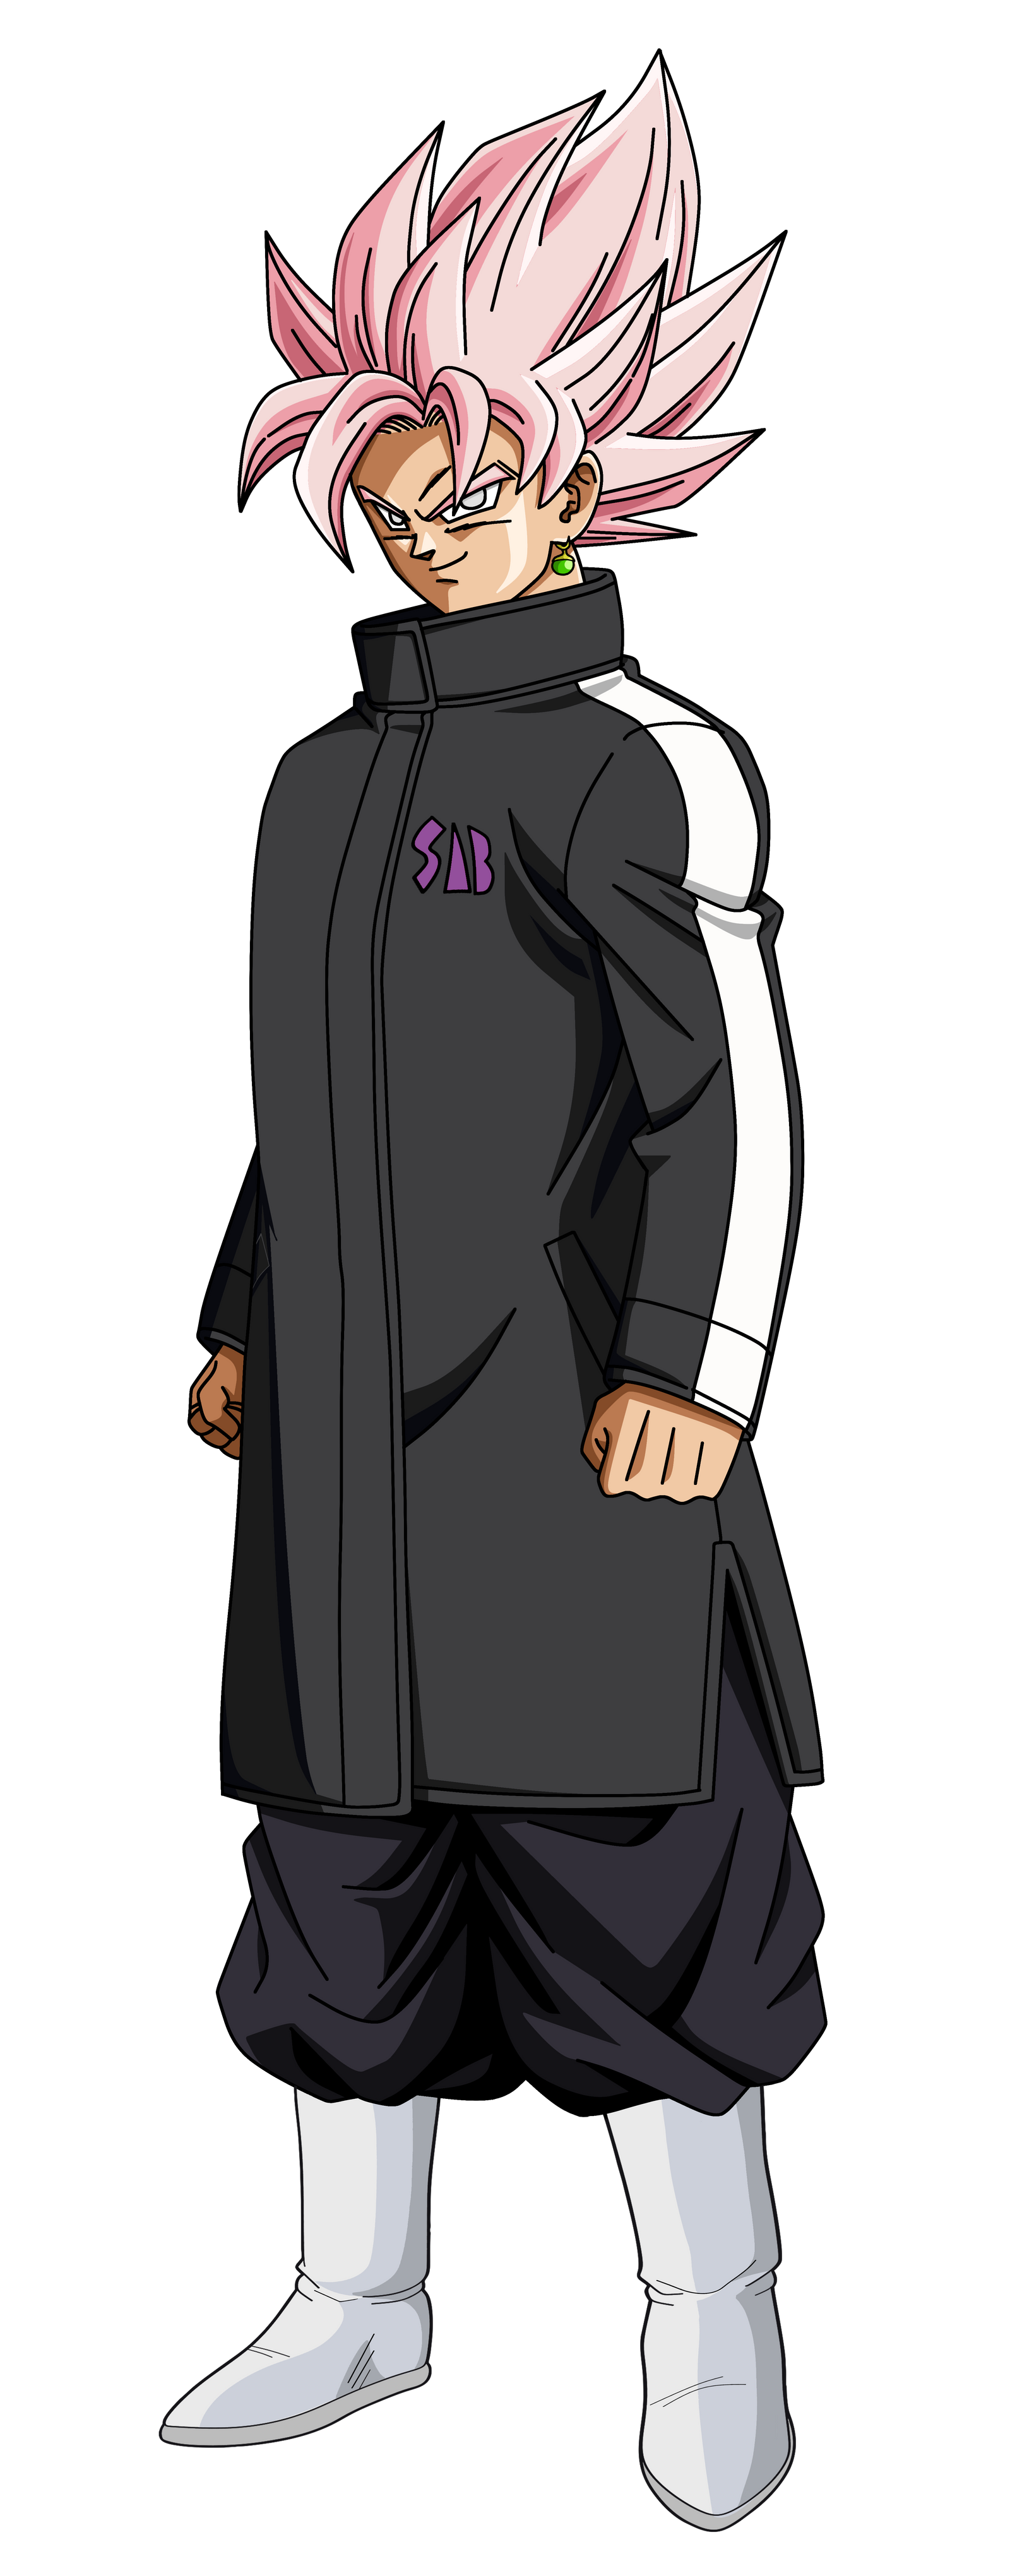 Goku Black With Sab Jacket By Obsolete00 On Deviantart - goku black sab jacket roblox